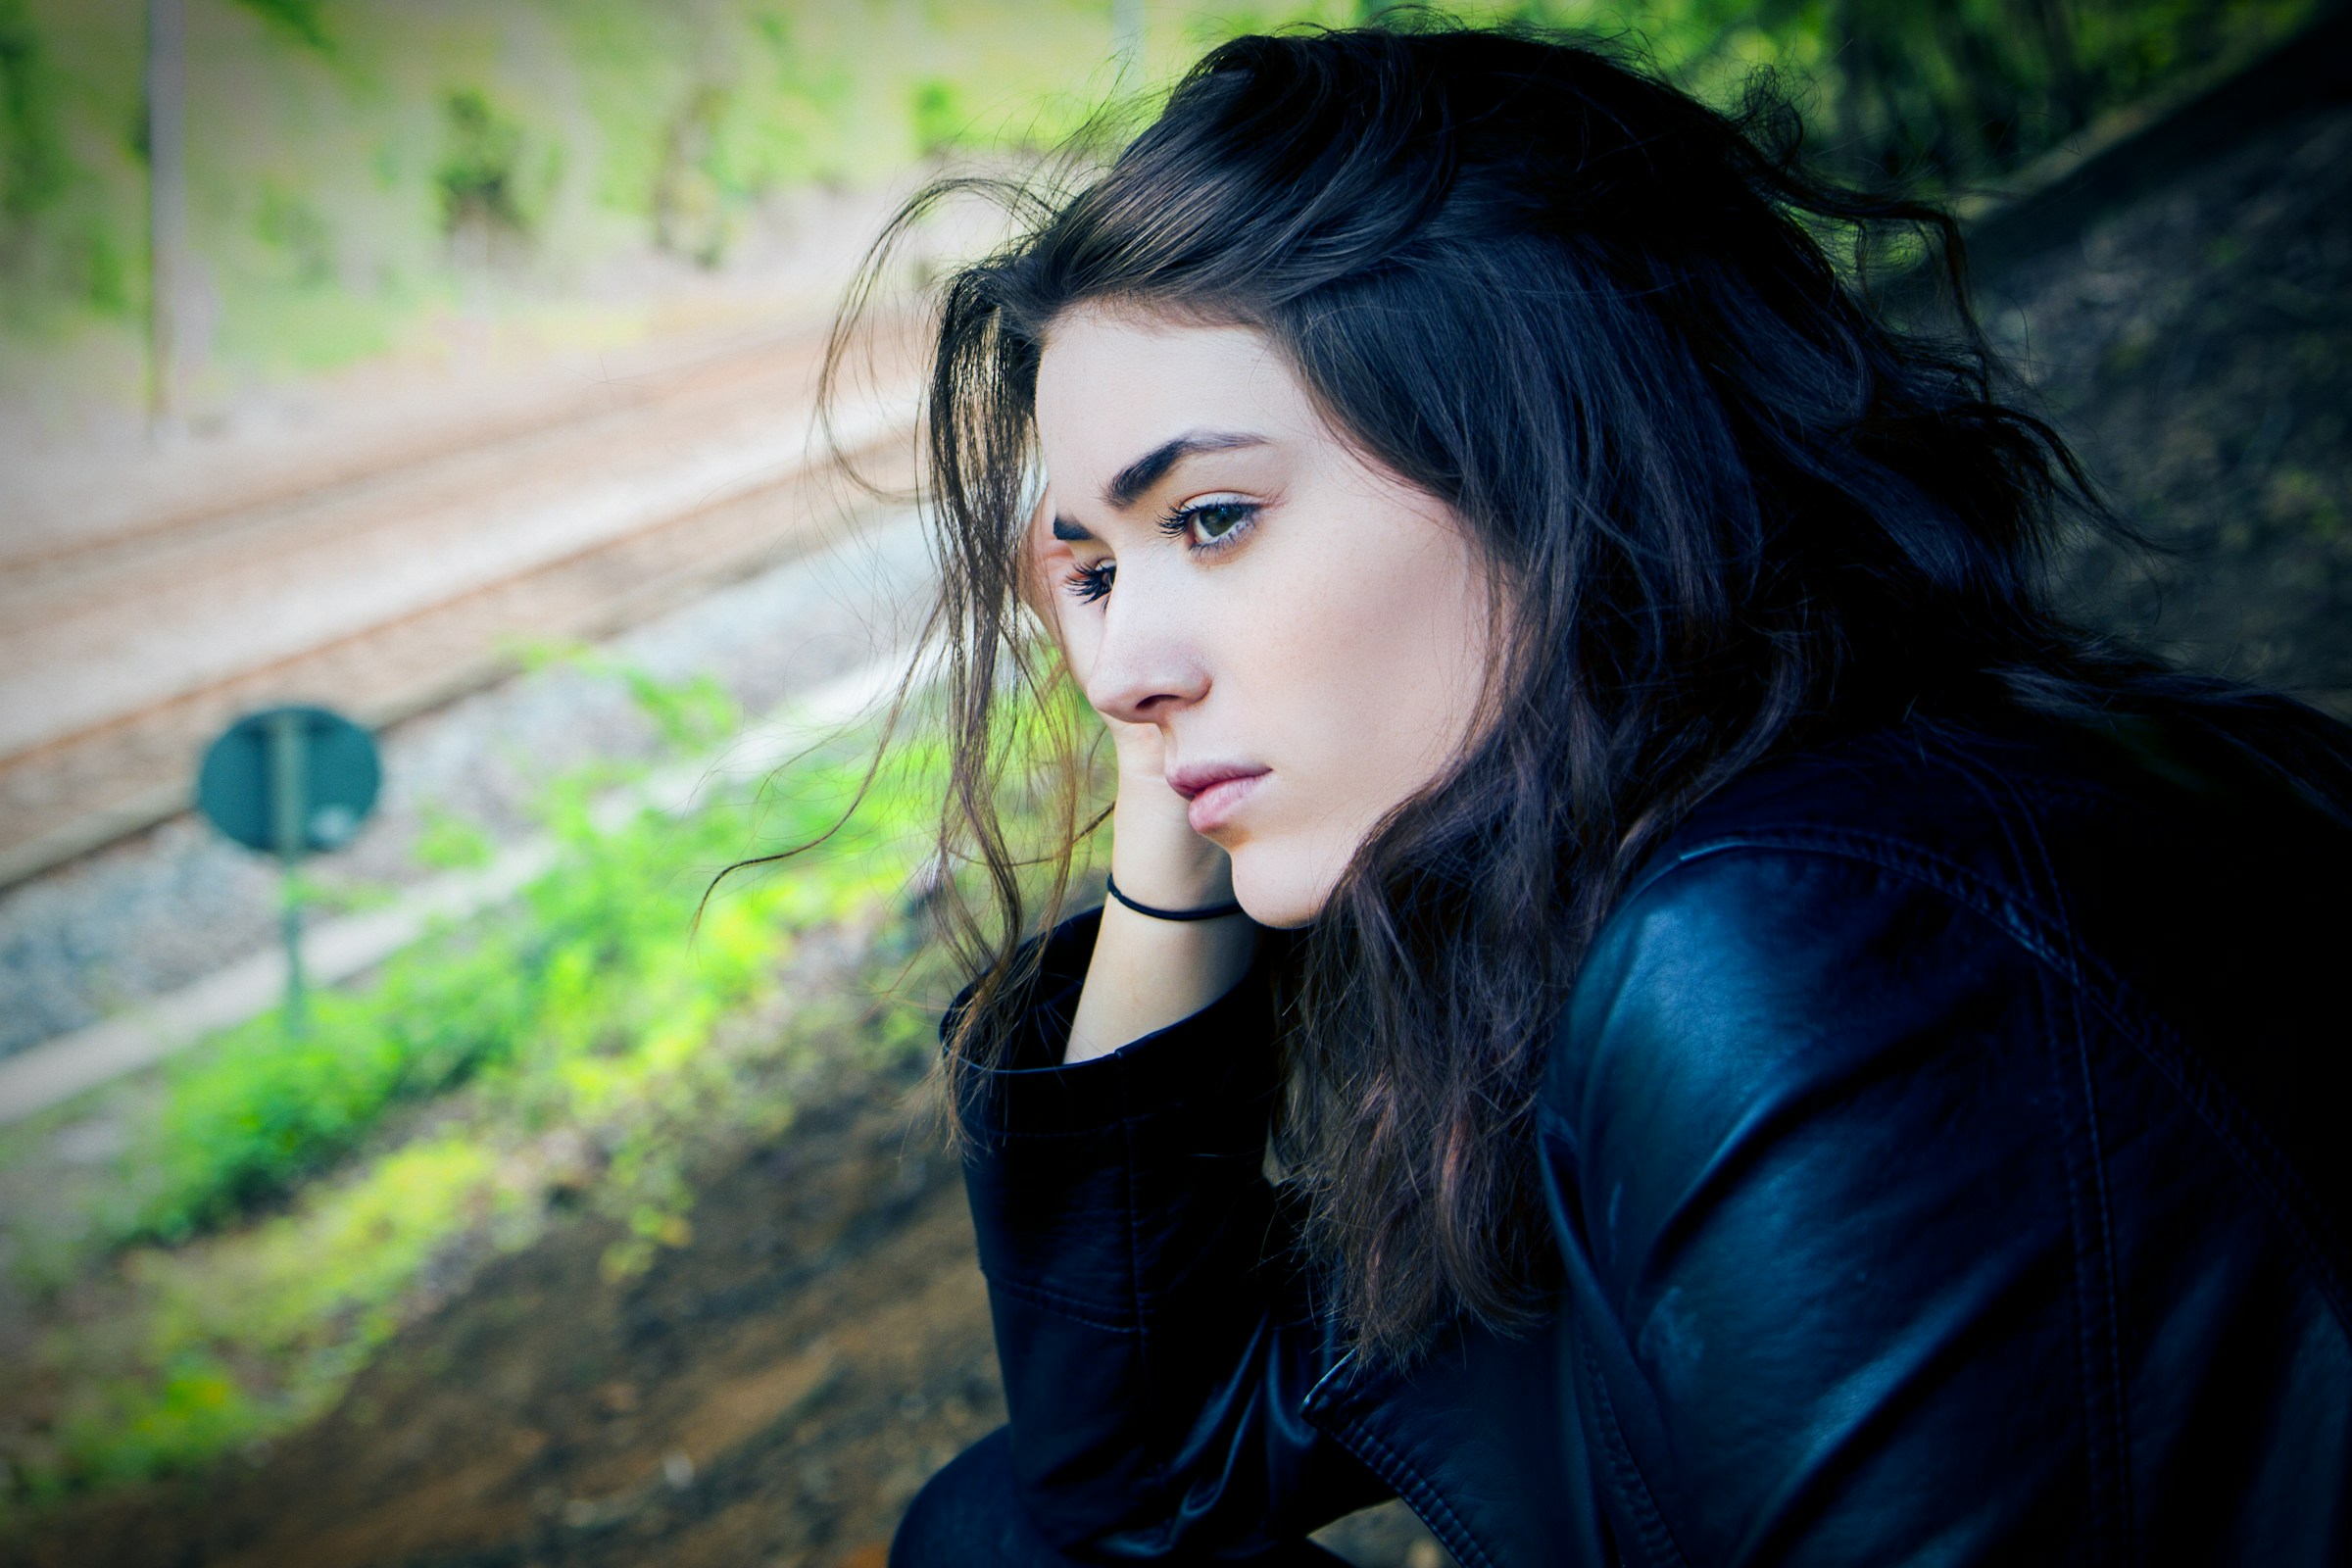 A sad woman sitting outdoors during daytime | Source: Unsplash